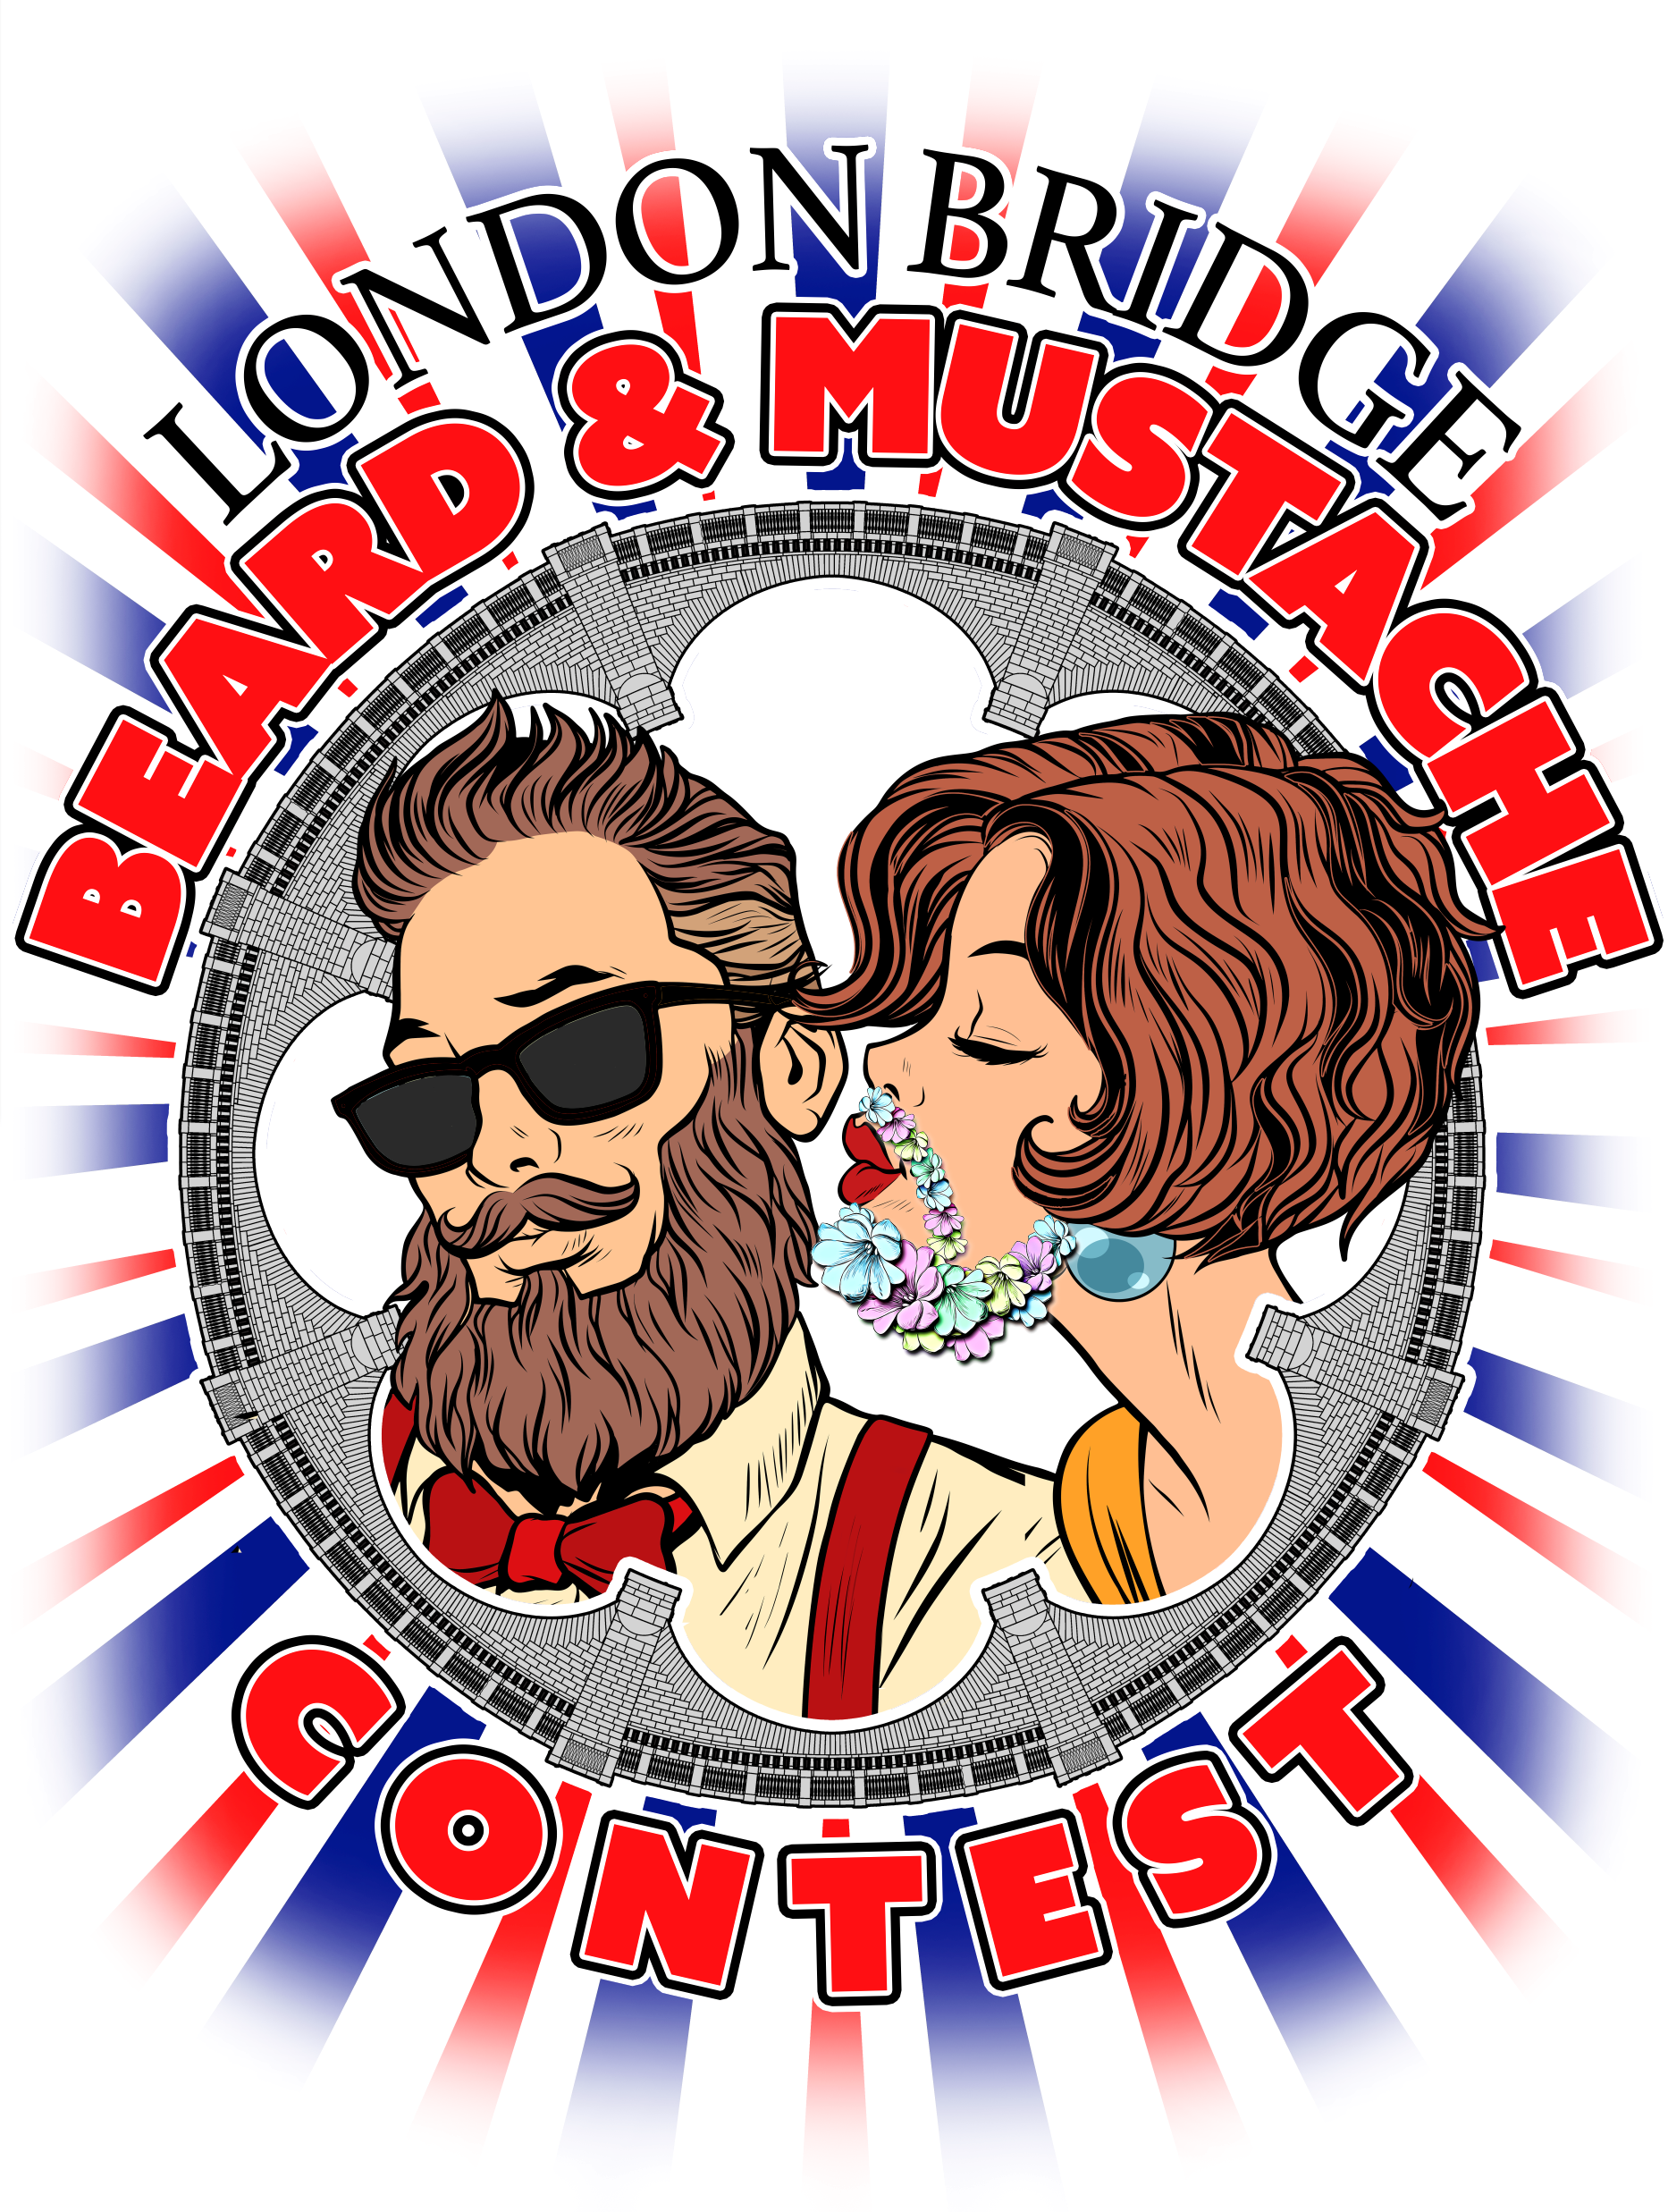 London Bridge Beard and Mustache Contest